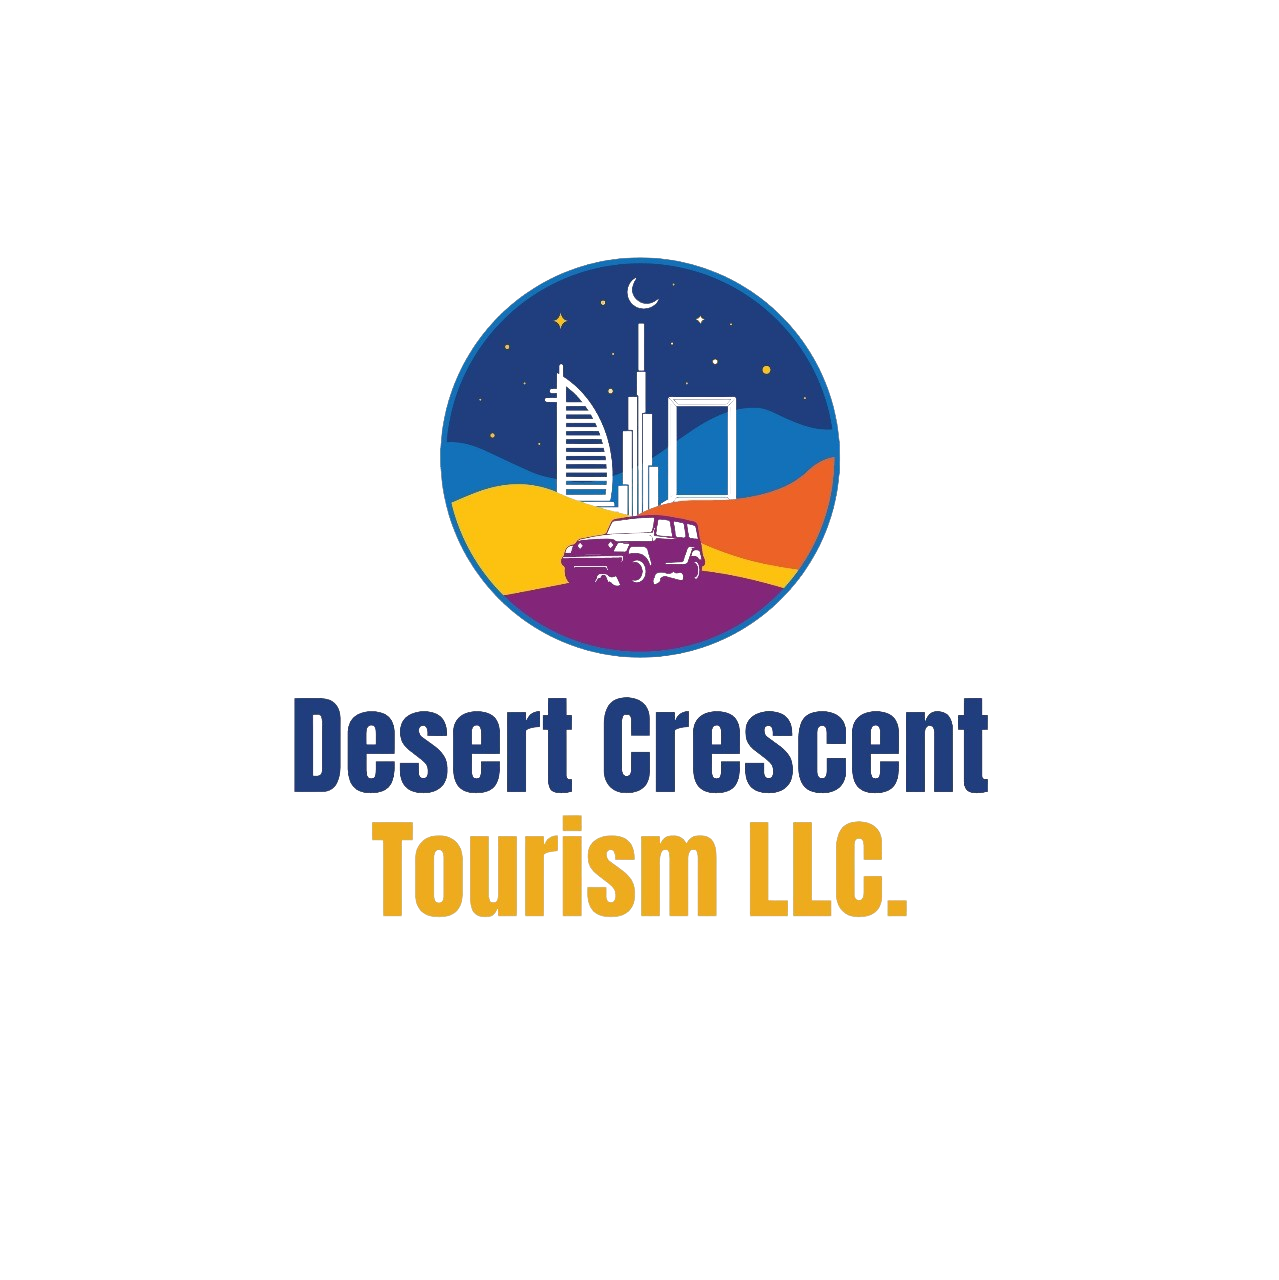 Travel Dubai City Desert Crescent tourism 